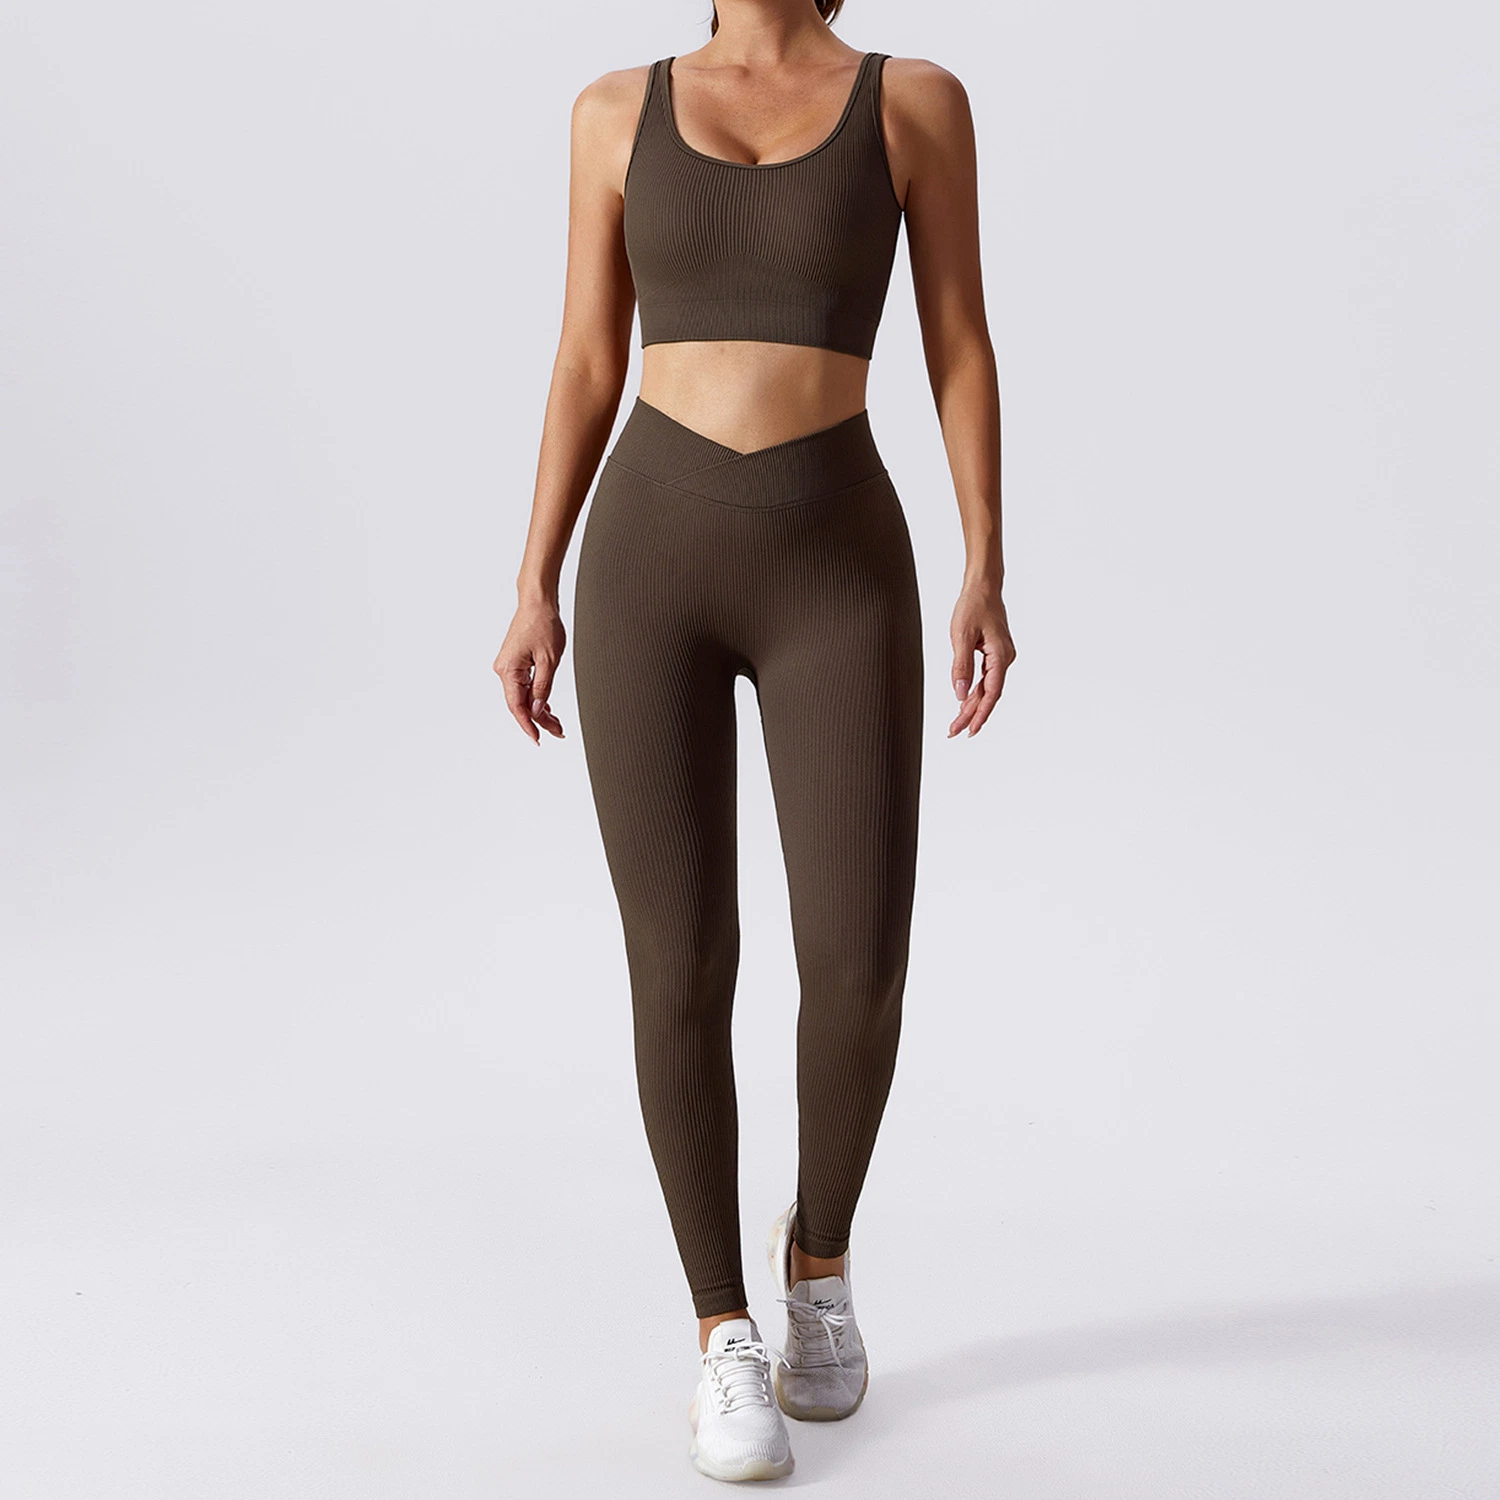 2 Pieces Seamless Women Tracksuit Yoga Set Running Workout Sportswear Gym Clothes Fitness Bra High Waist Leggings Sports Wear